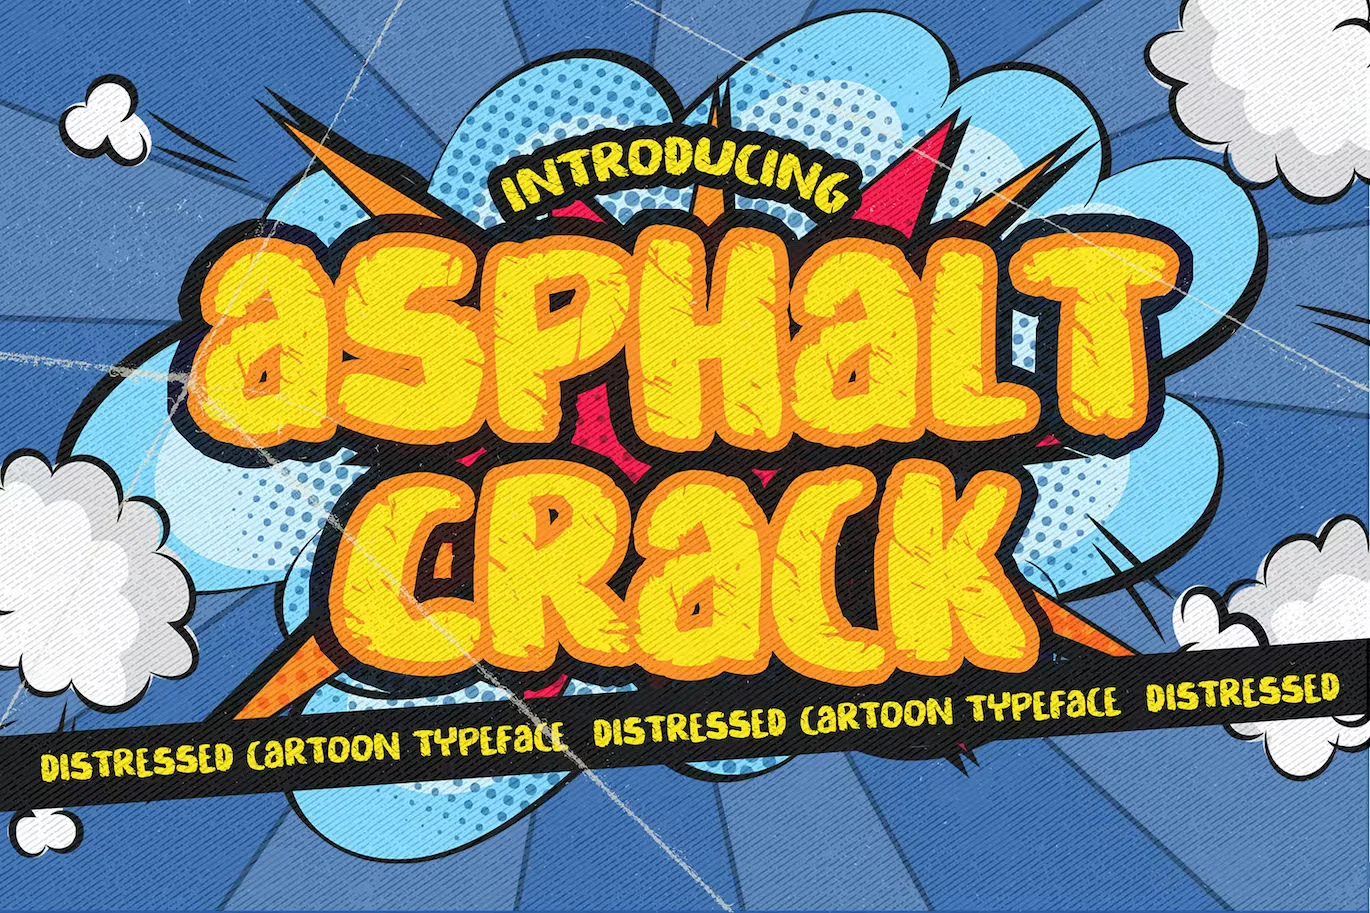 Asphalt Crack - Distressed Cartoon Typeface